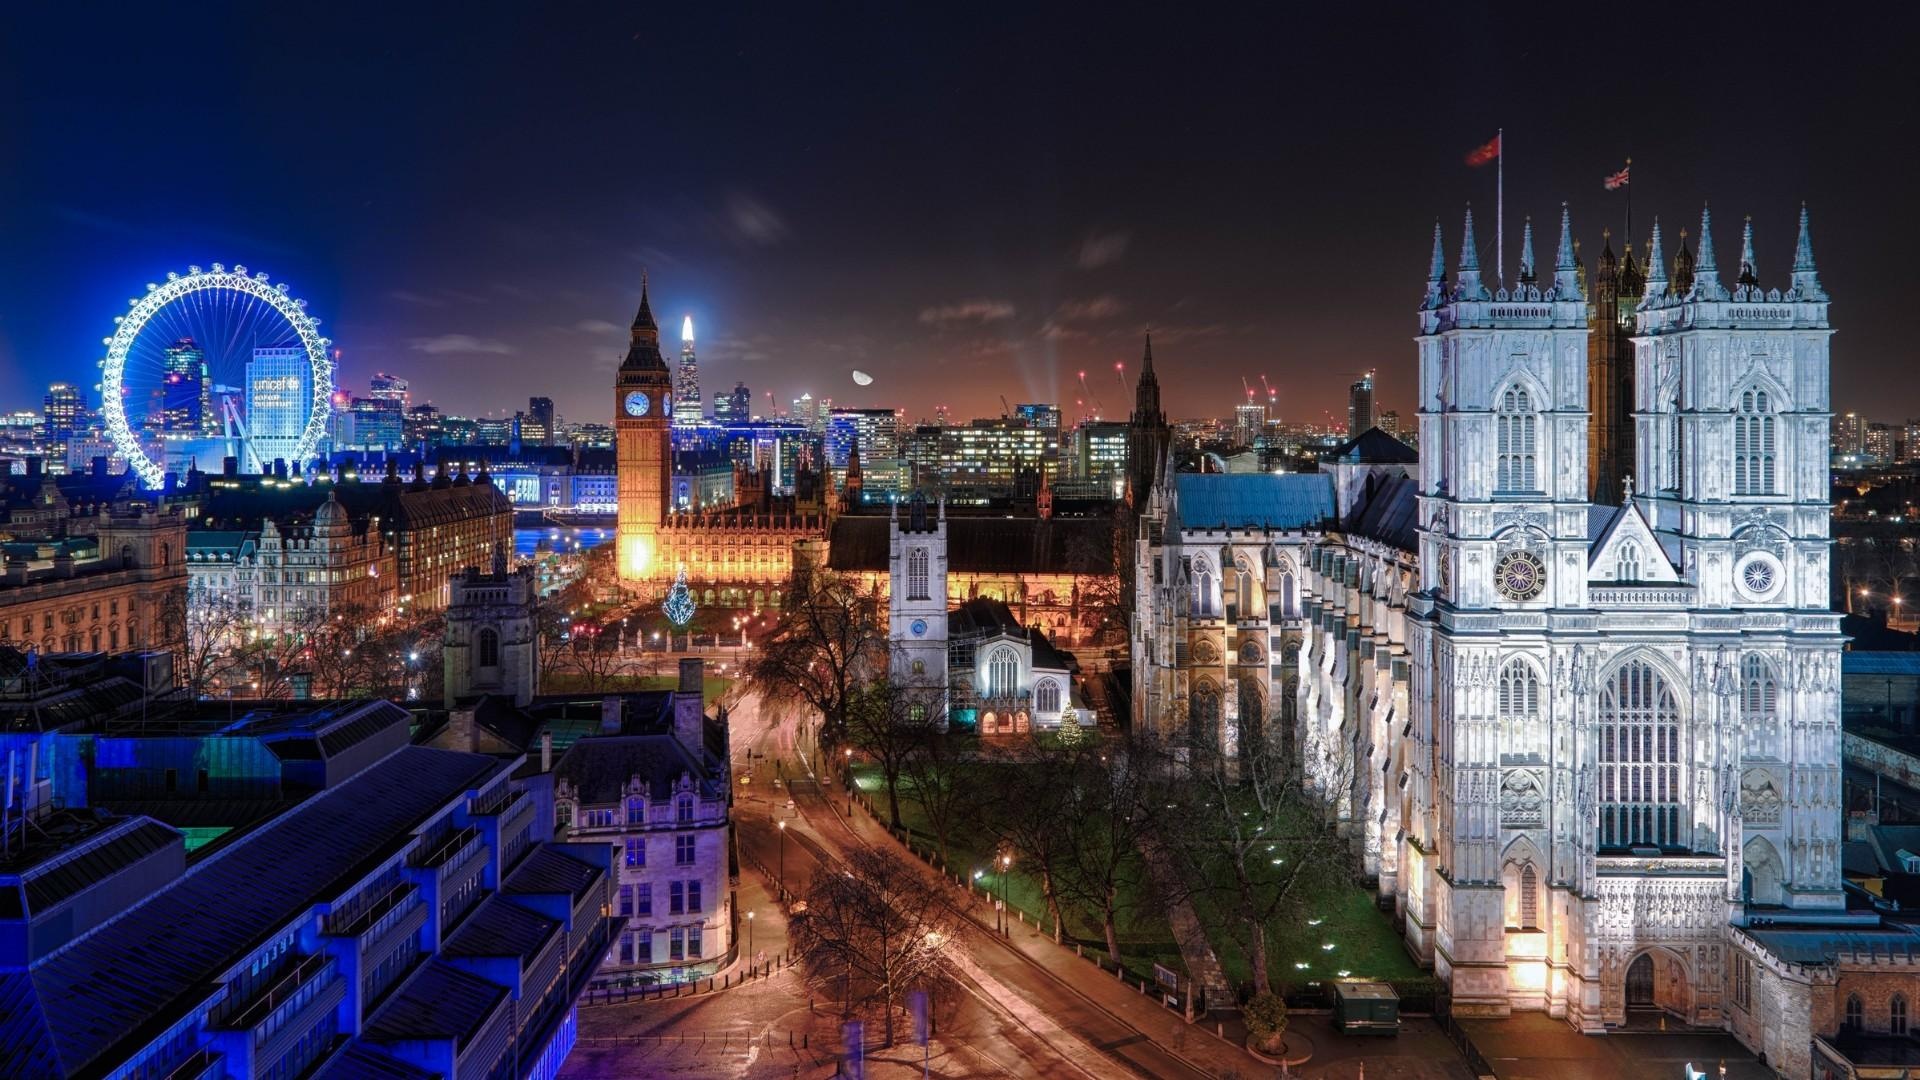 London: Westminster Abbey, Night city, Metropolis. 1920x1080 Full HD Wallpaper.